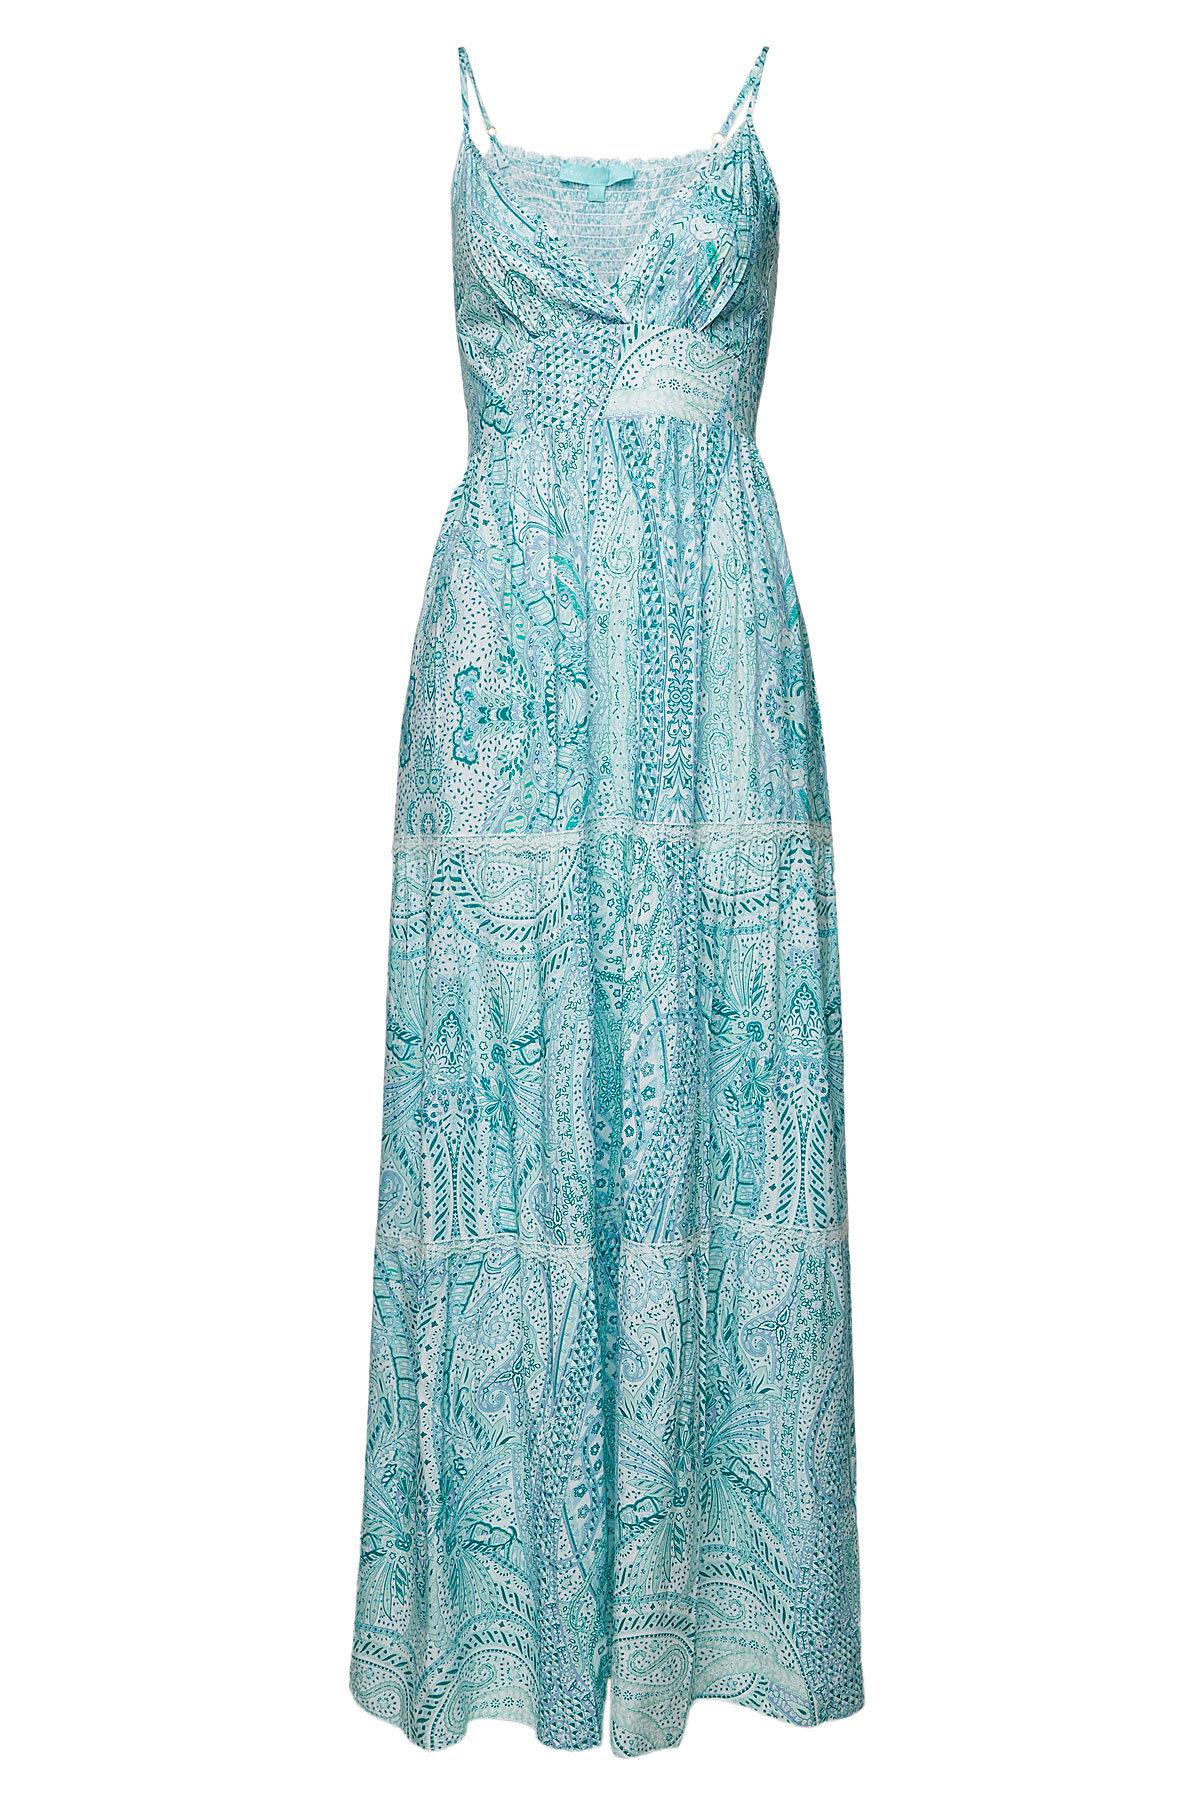 Lyst - Melissa Odabash Jaime Printed Maxi Dress in Blue